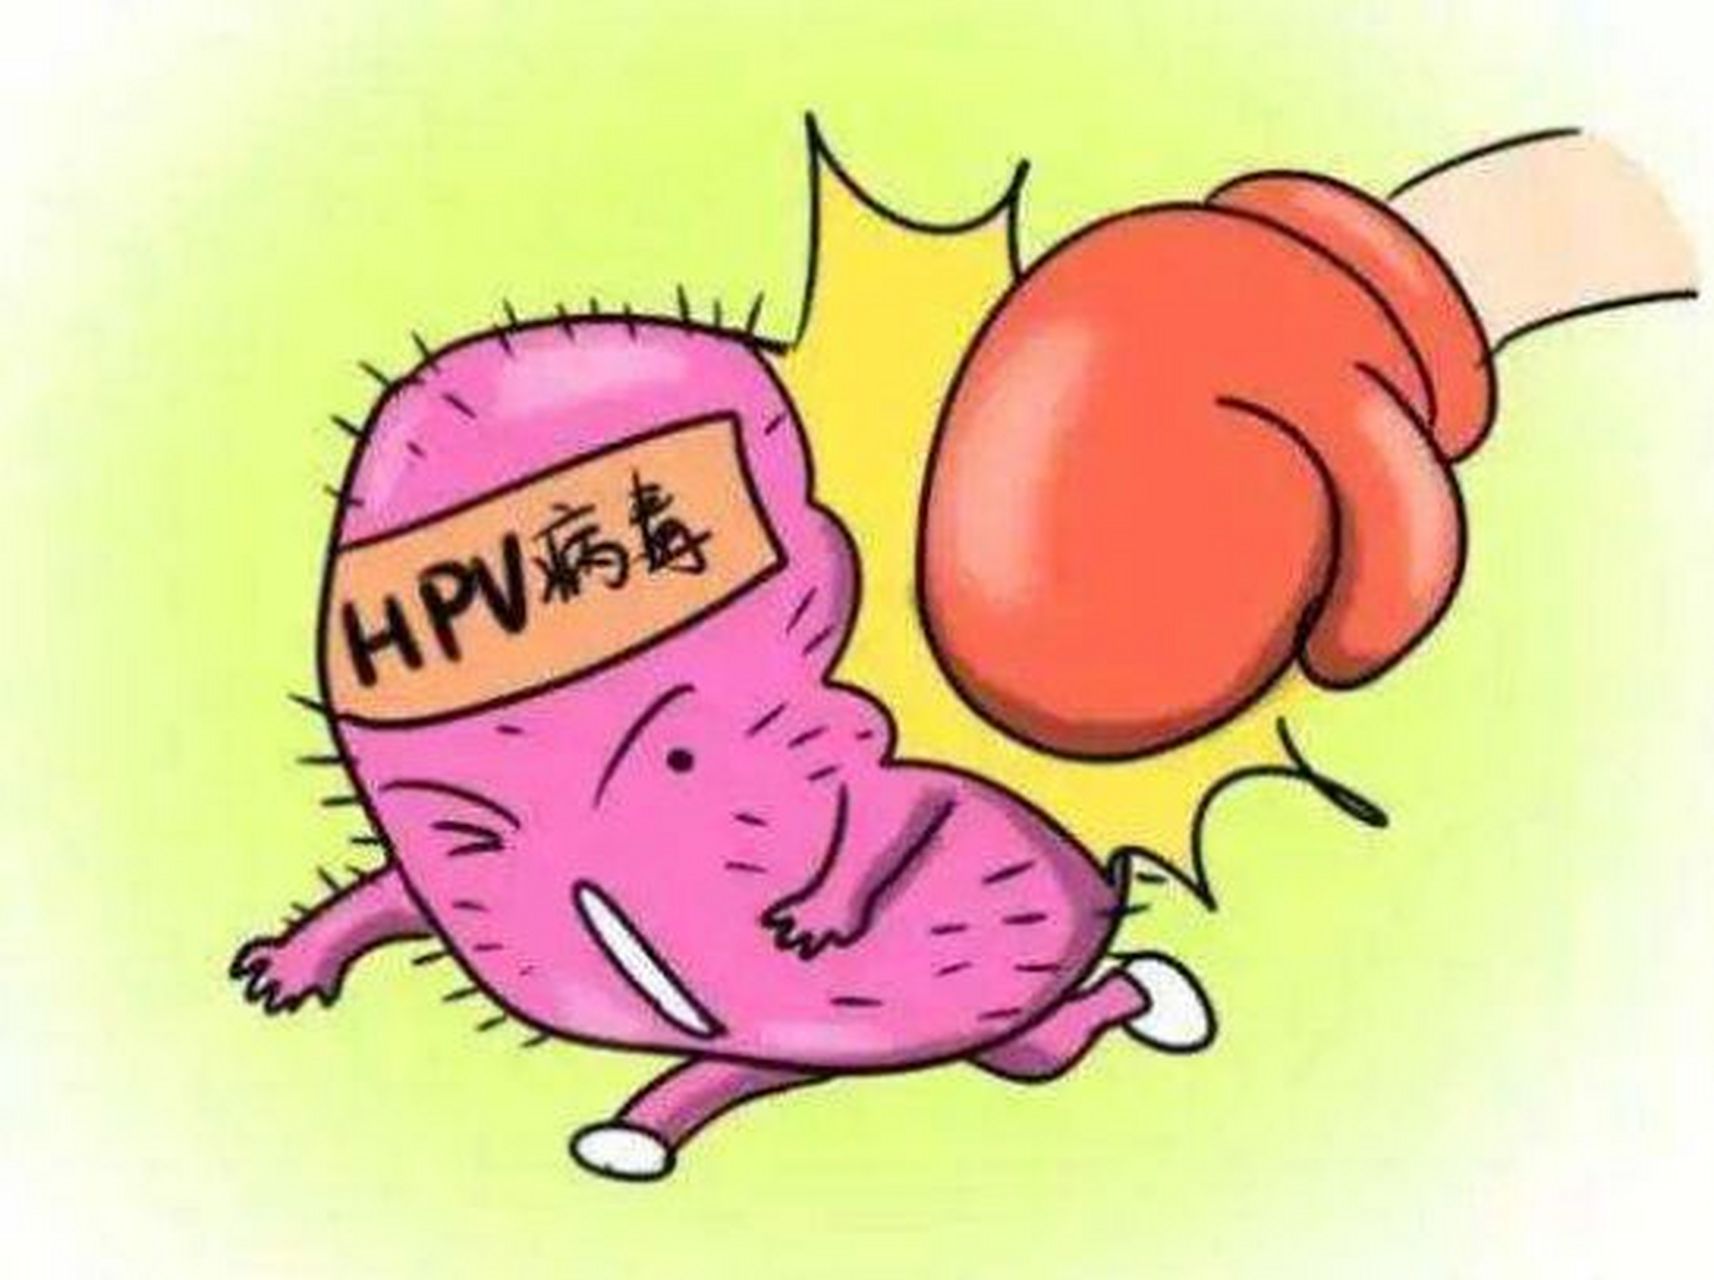 hpv18确实是属于高危型hpv,而且是致癌性最强的hpv类型之一,它和hpv